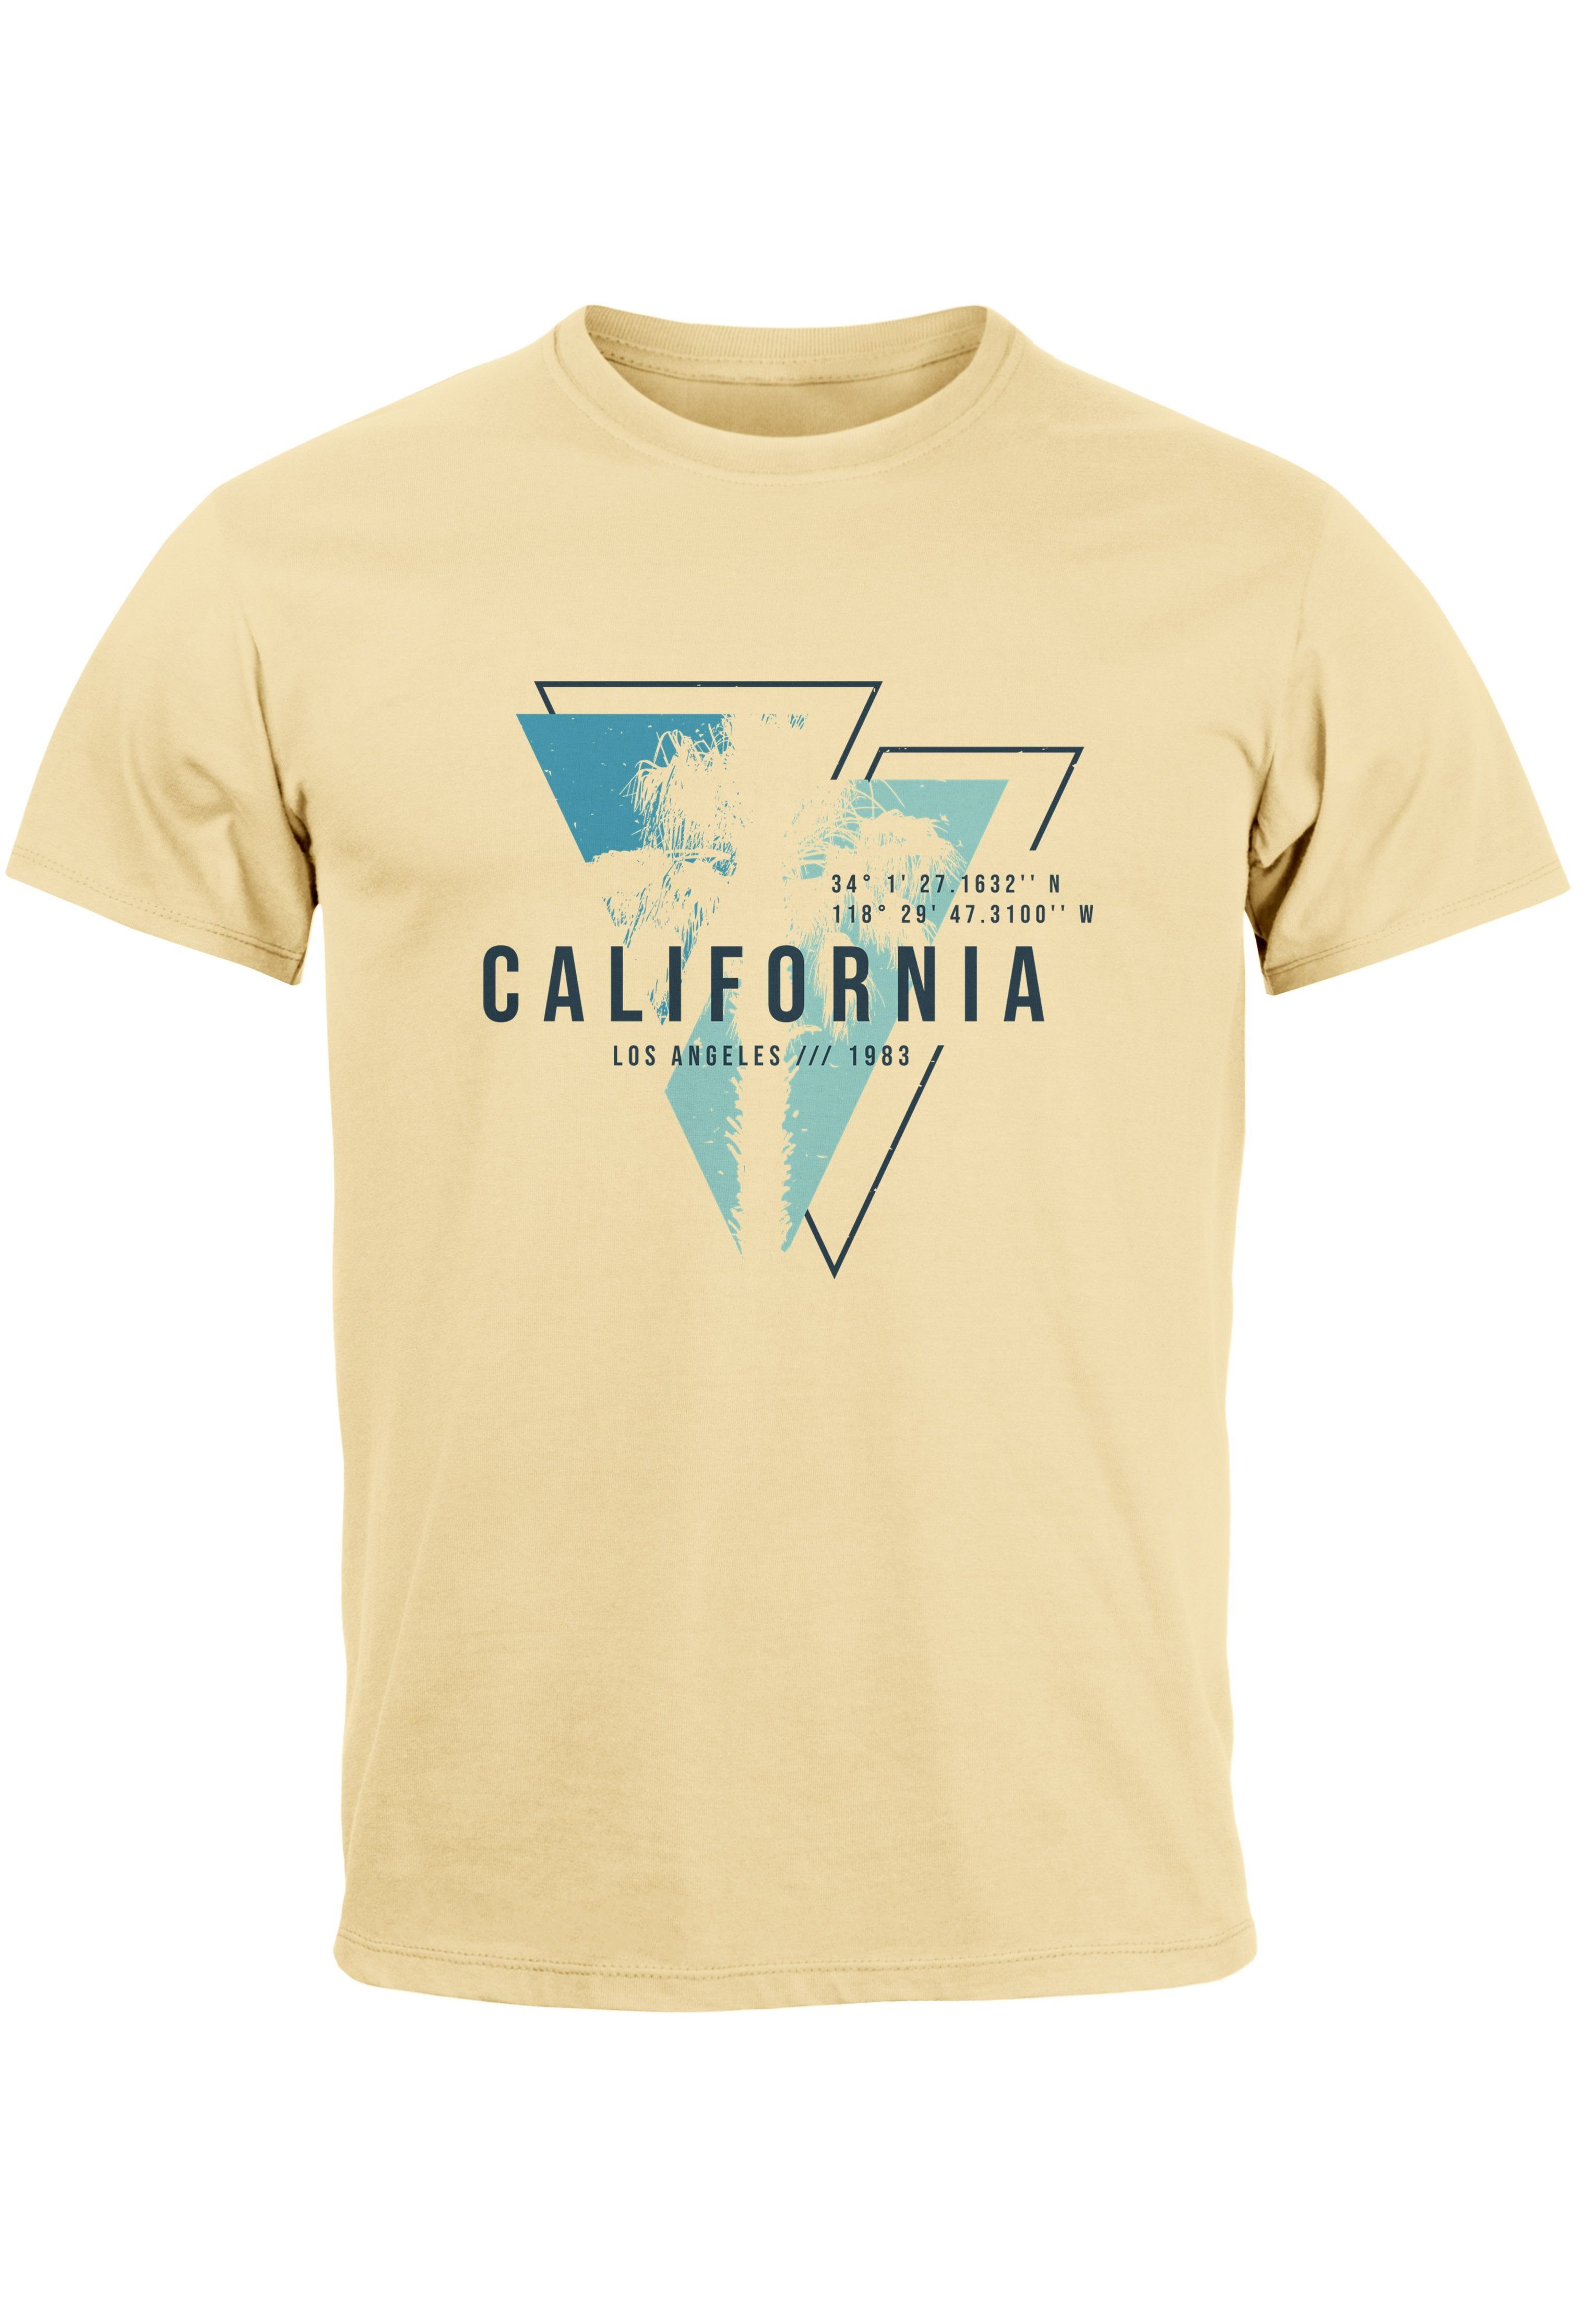 Neverless Print-Shirt Herren T-Shirt California Los Angeles Surfing Motiv Sommer Fashion USA mit Print natur